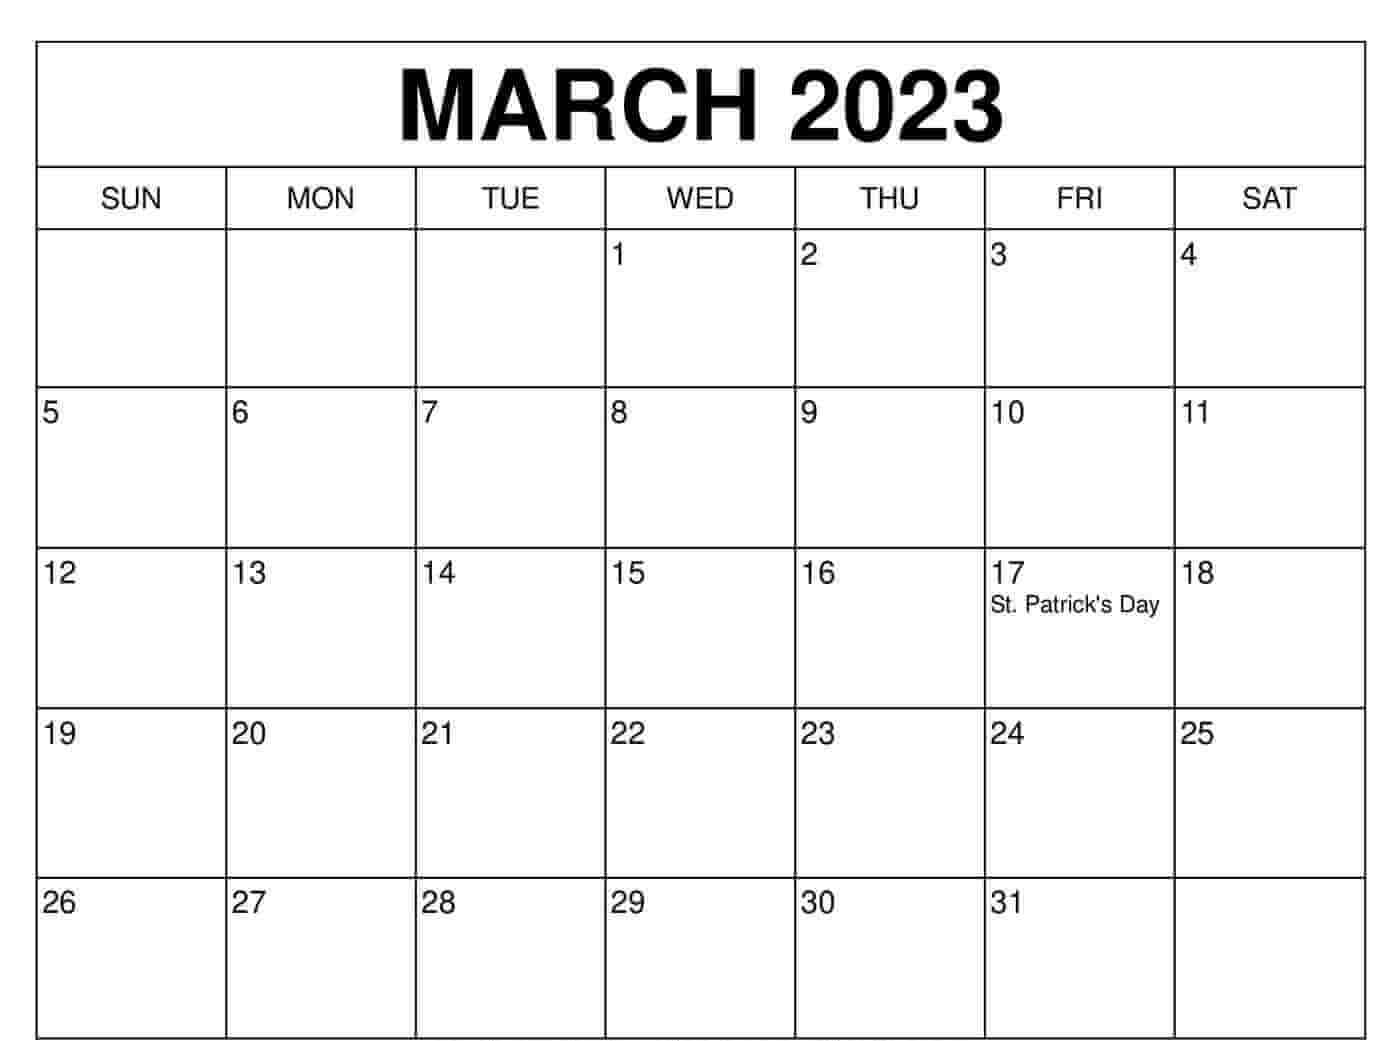 March 2023 Holidays Calendar